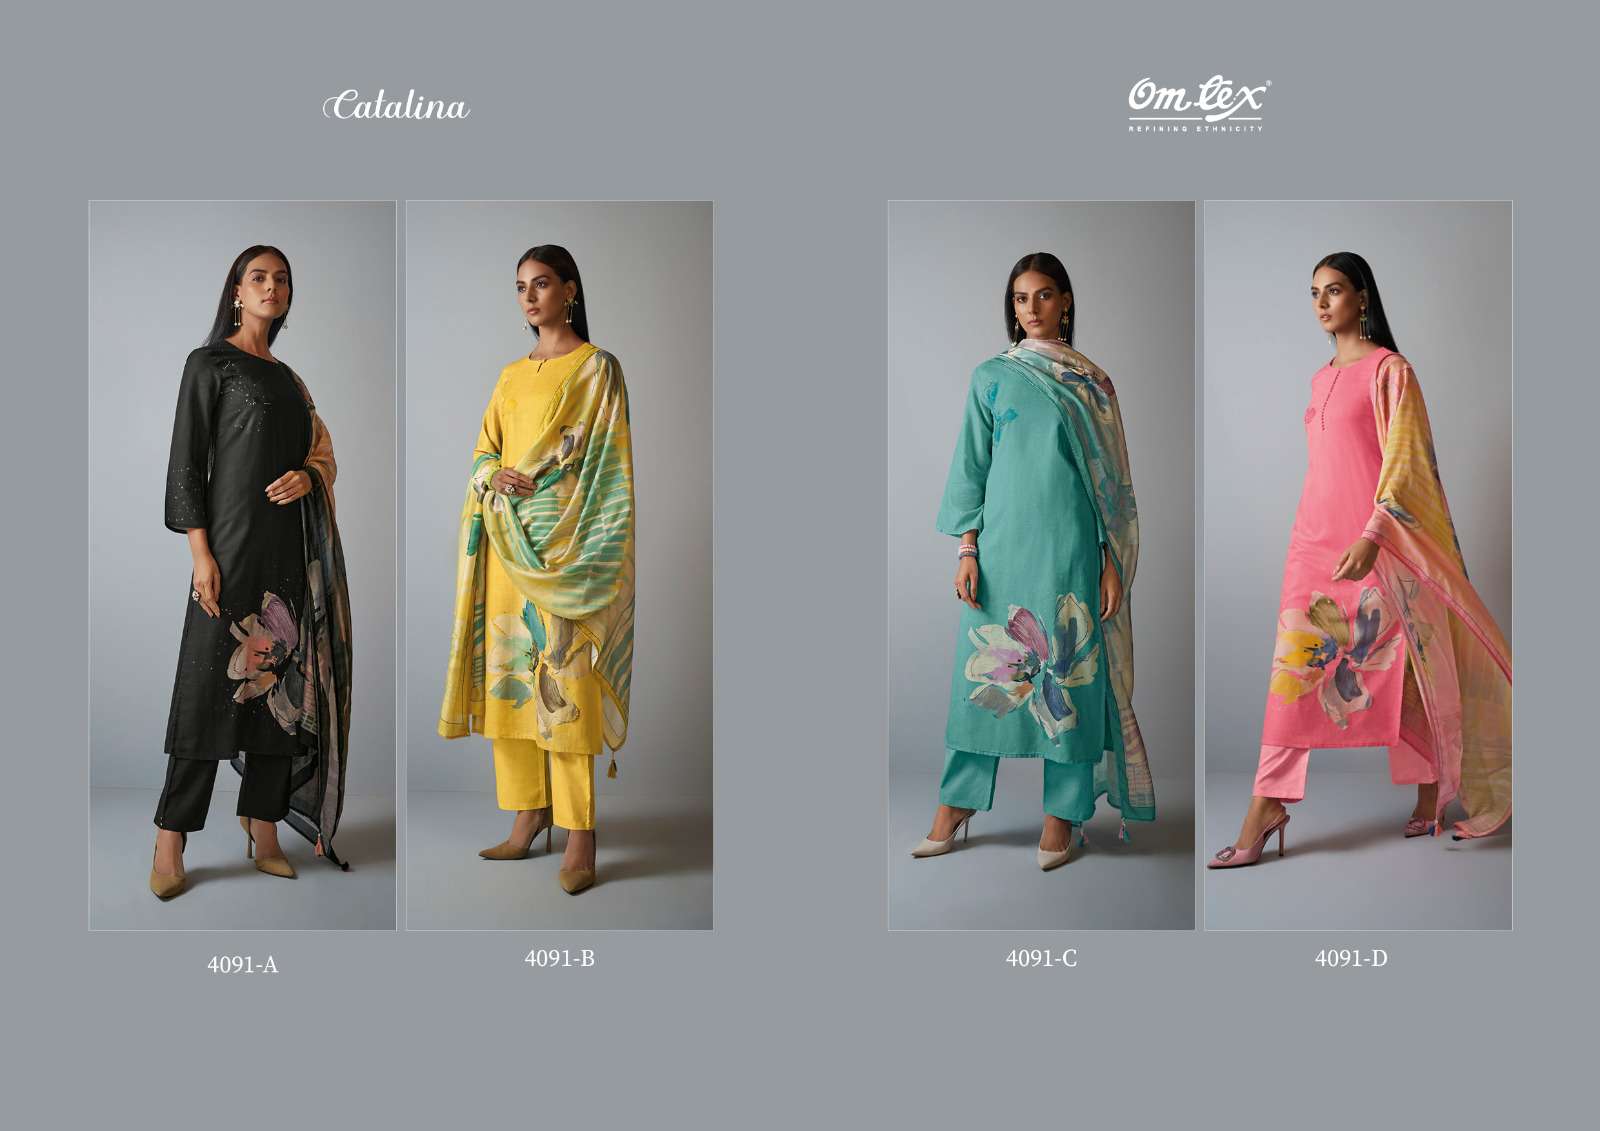 OMTEX CATALINA Salwar Kameez Wholesale catalog